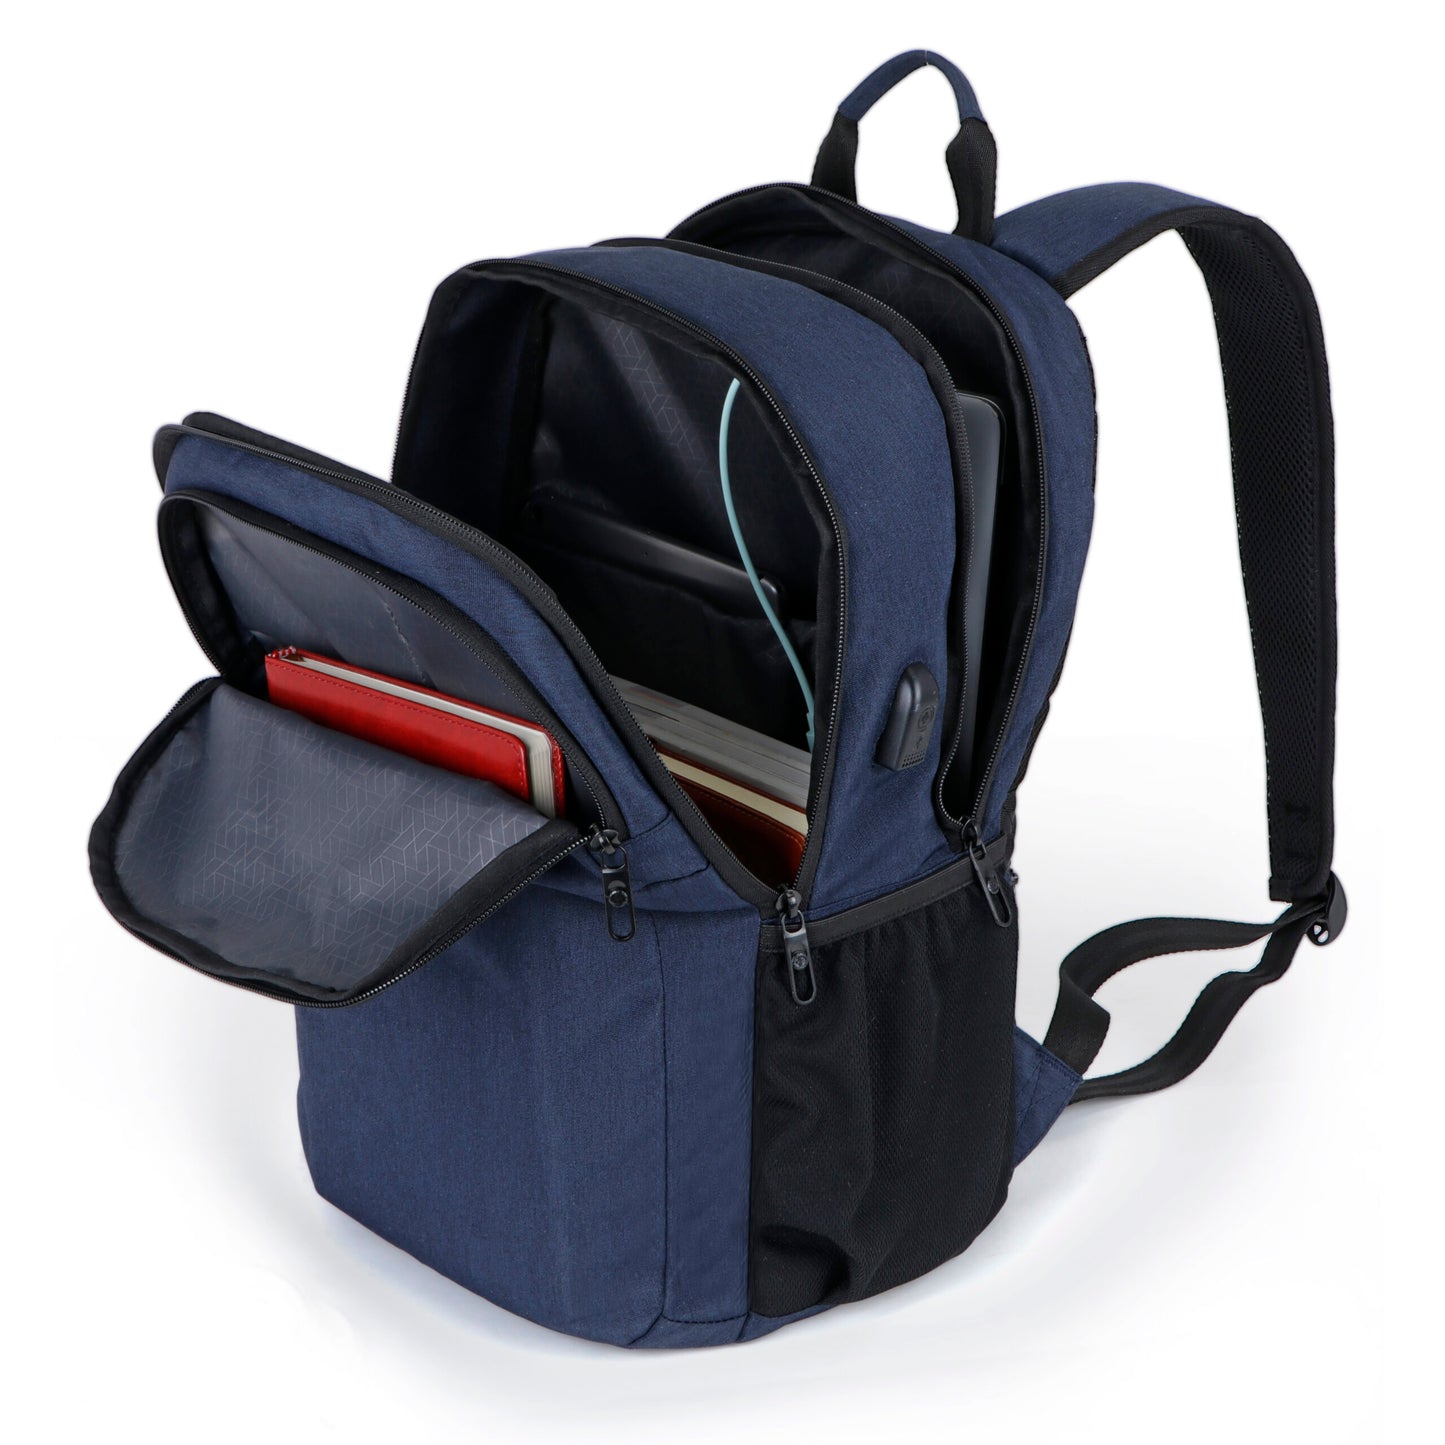 Swissdigital Biberstein Computer Backpack - Dark Blue